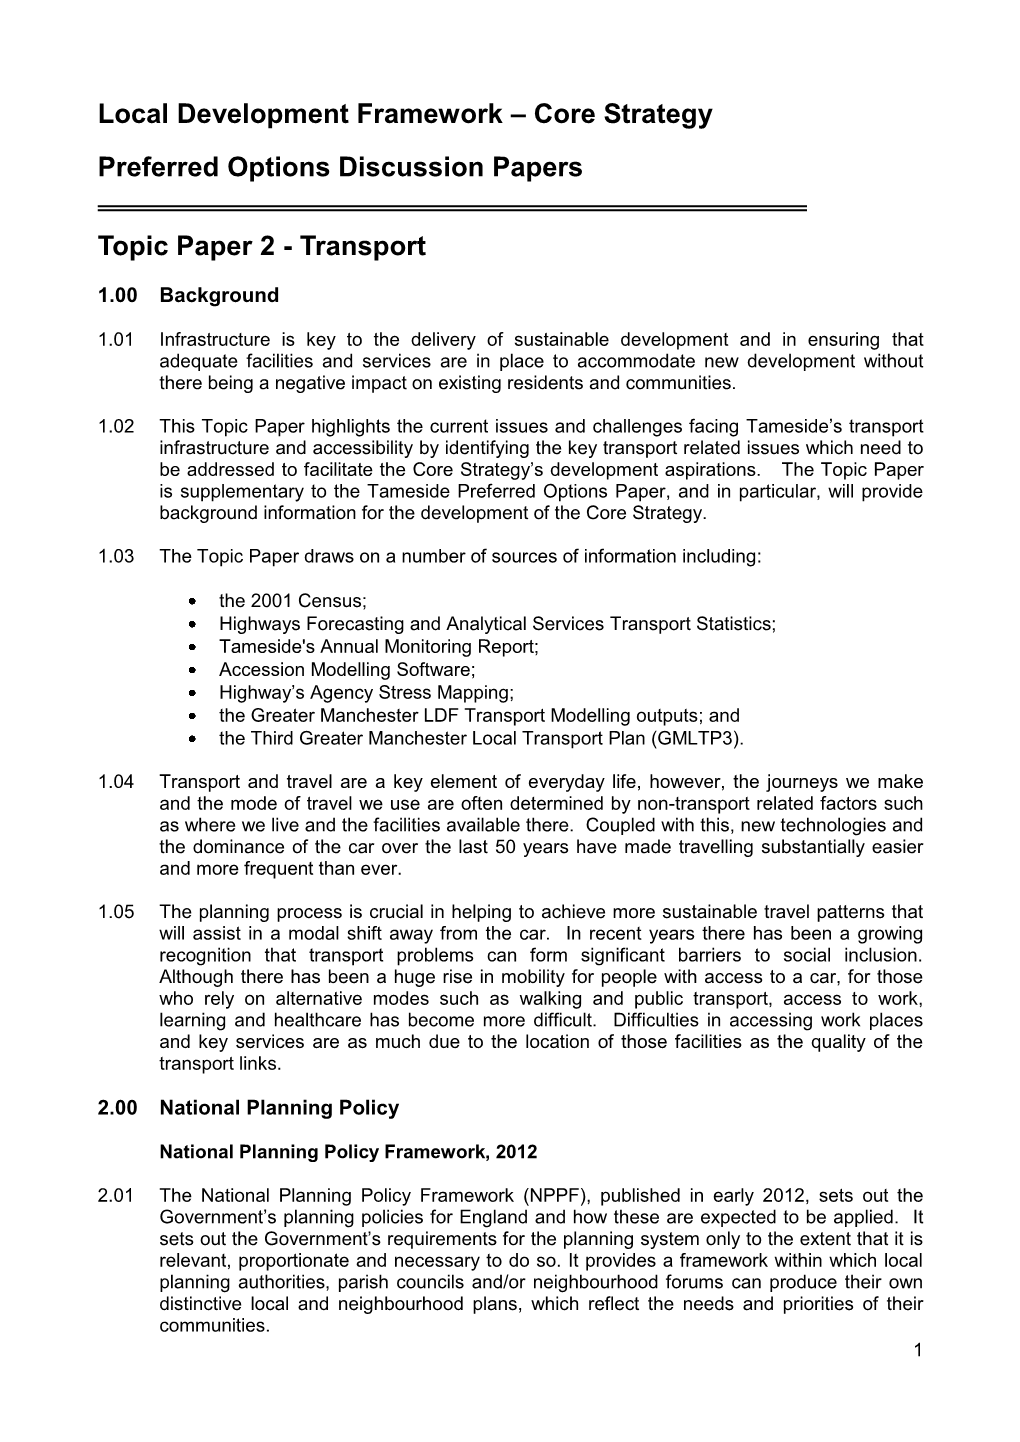 Topic Paper 2 - Transport